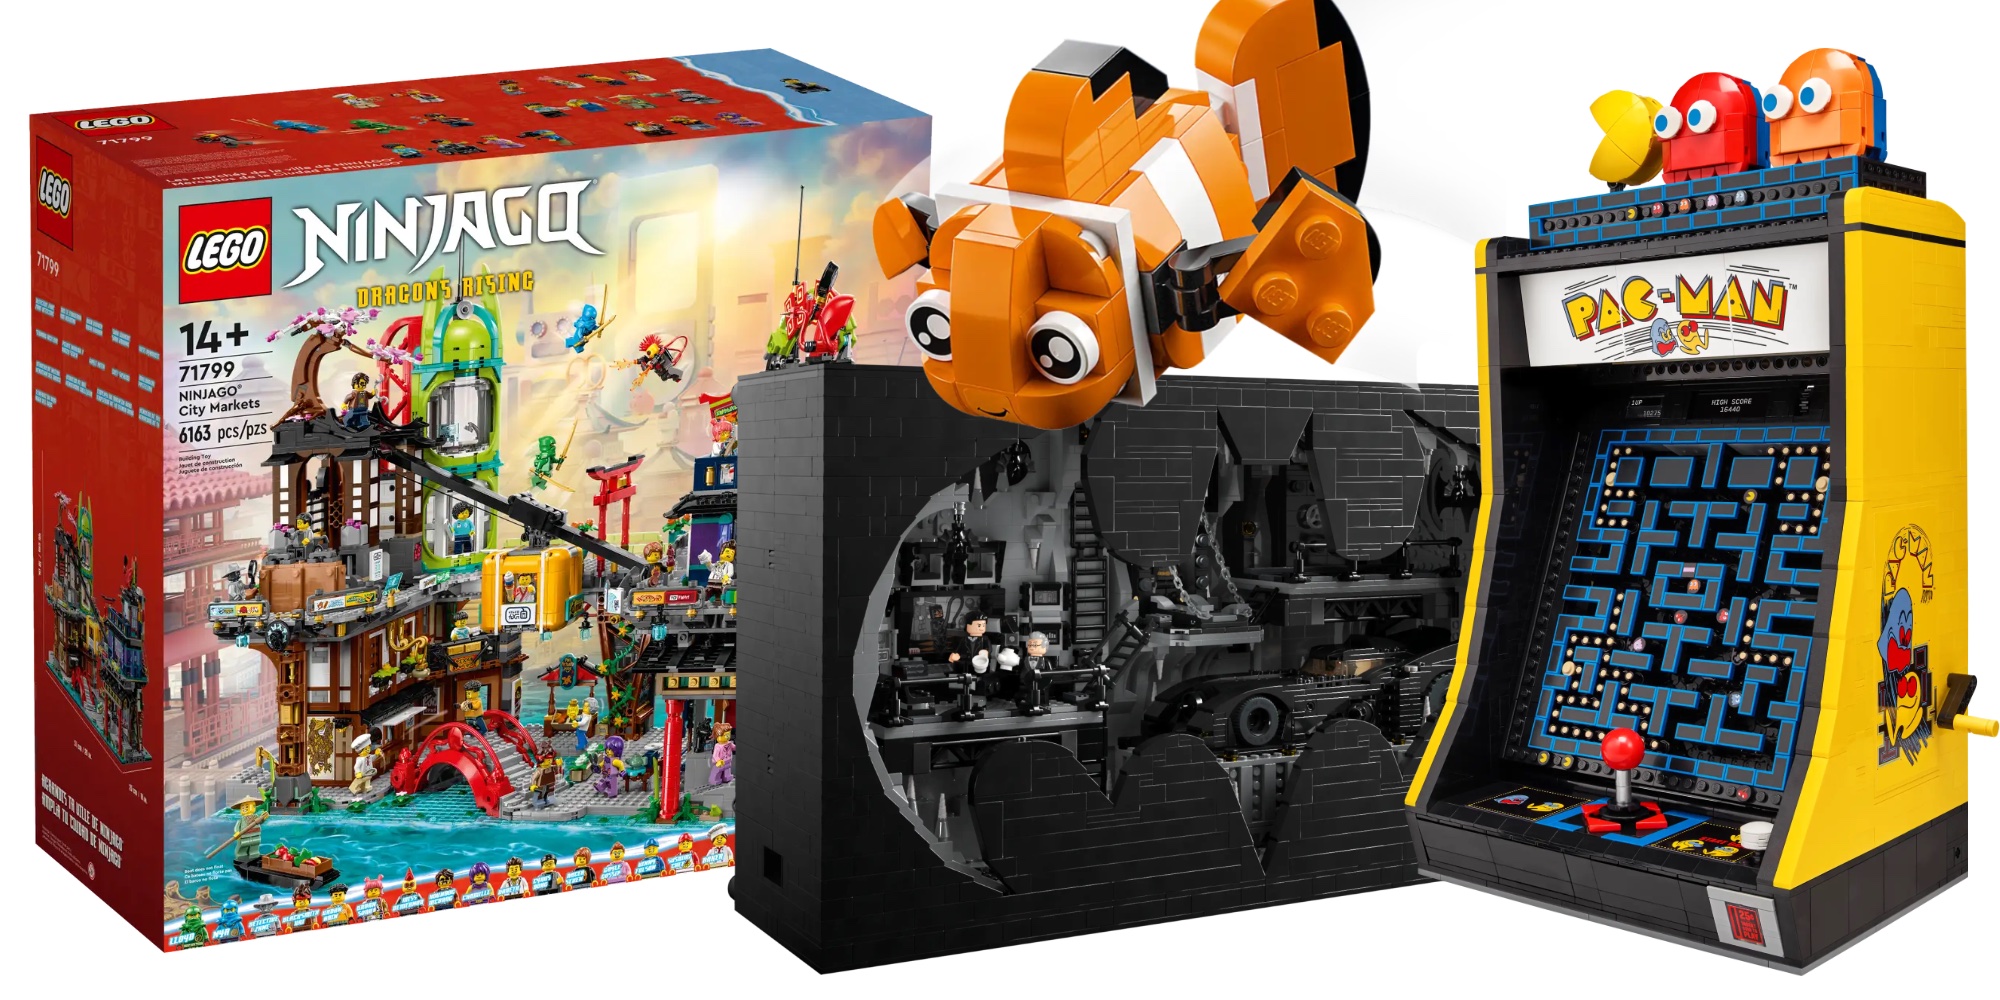 New LEGO sets June Disney, Jurassic Park, Ninjago, more